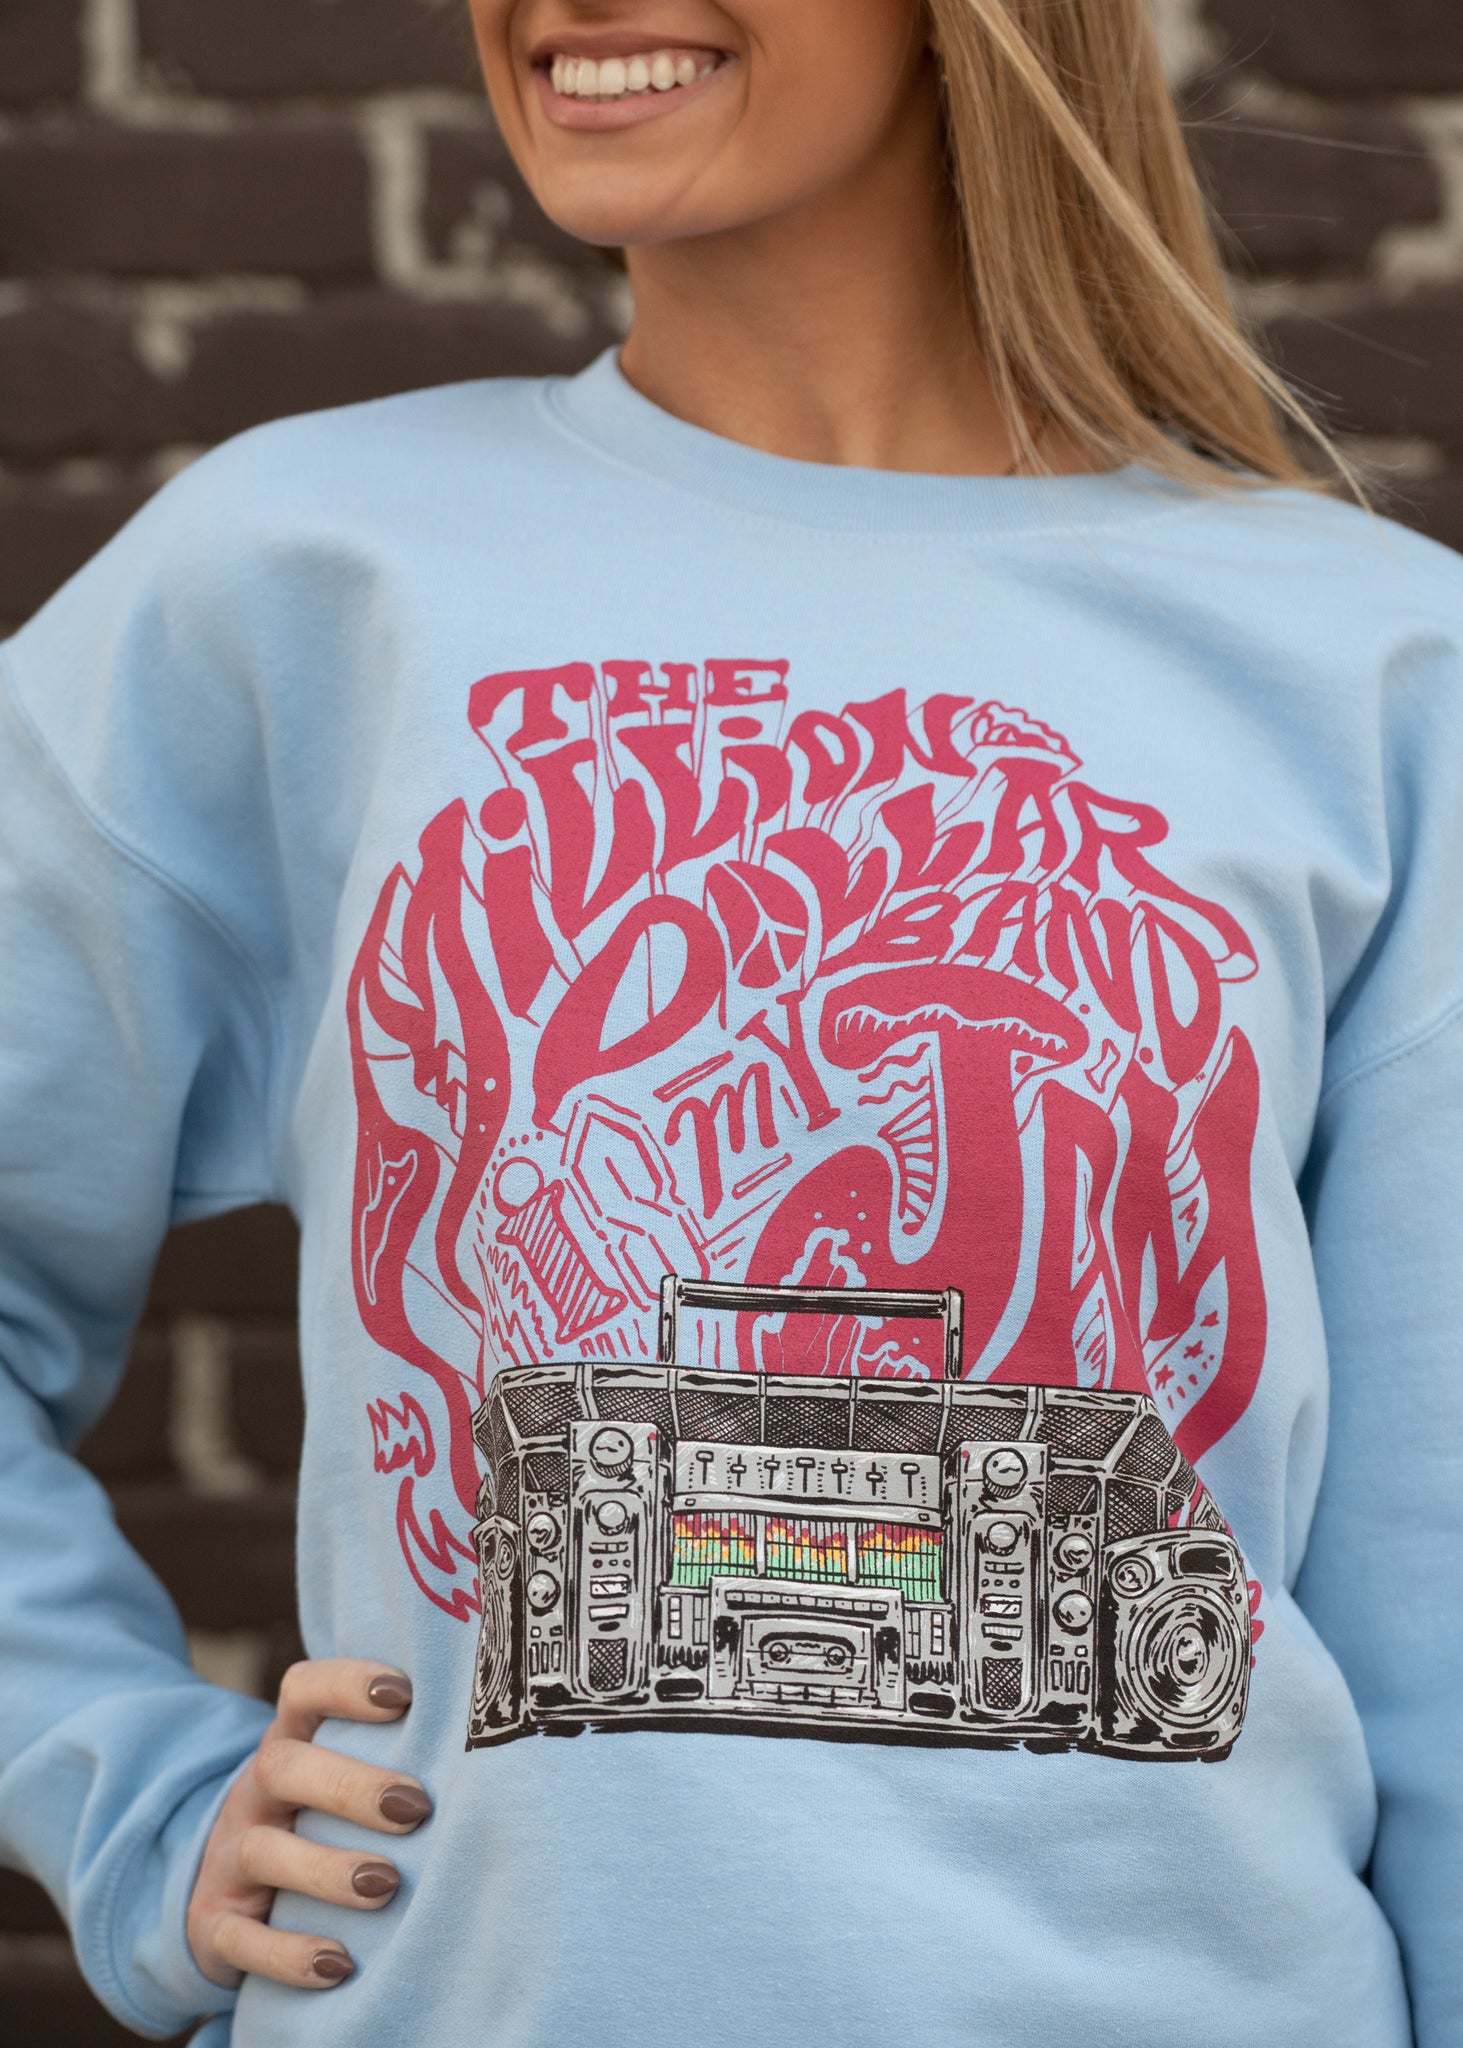 The Million Dollar Band is My Jam Sweatshirt